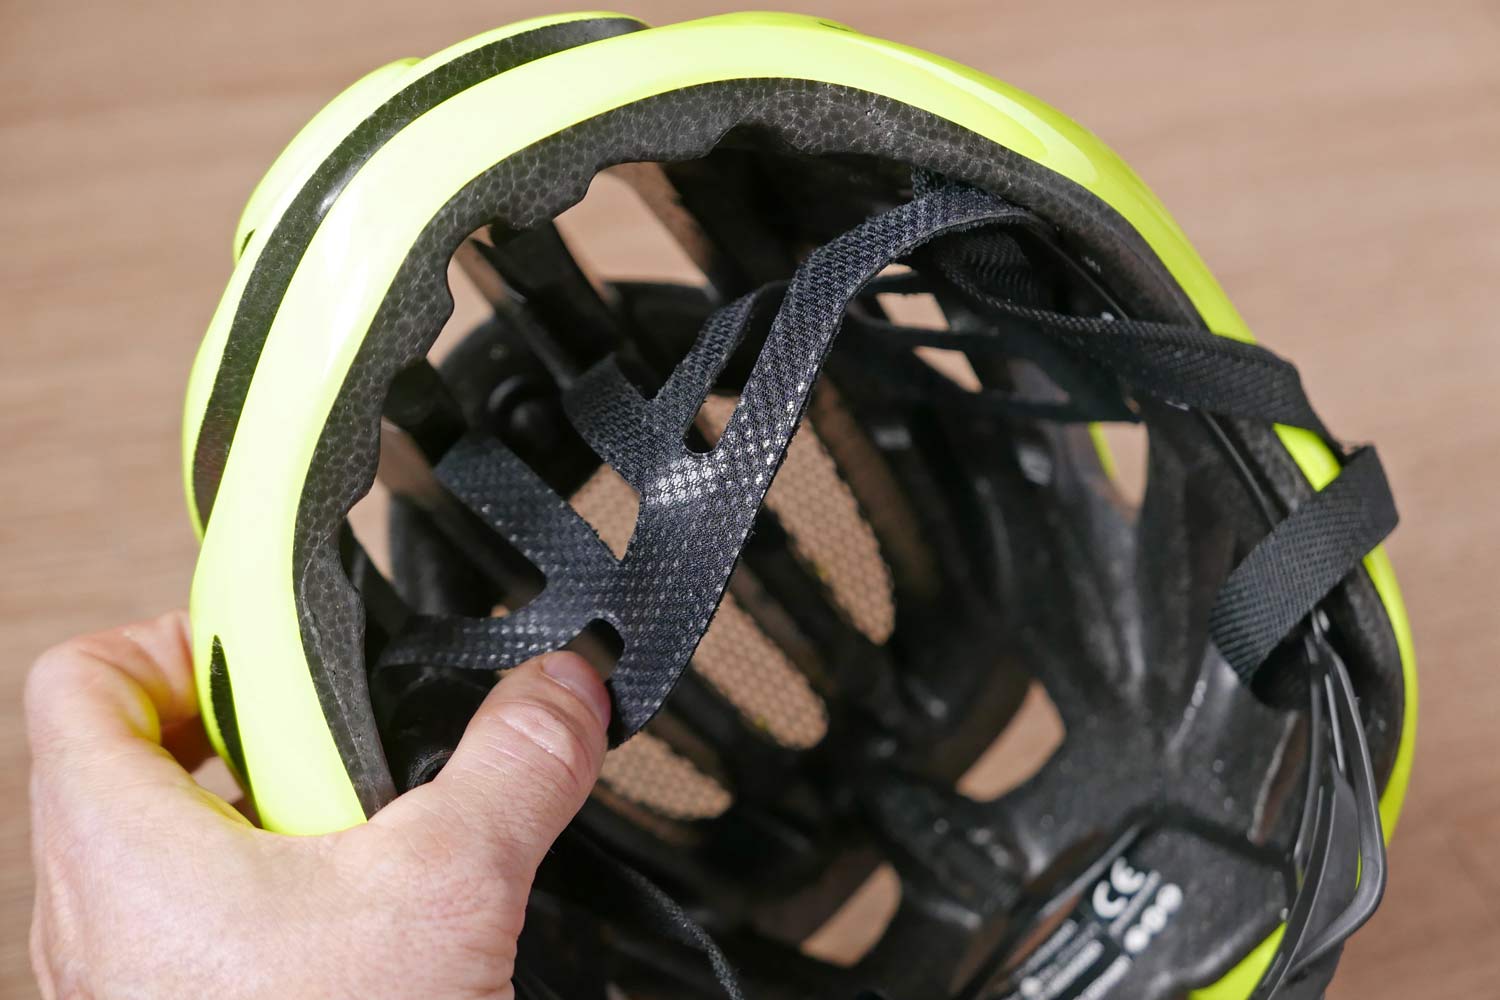 Bike helmet, AirBreaker, for road cycling